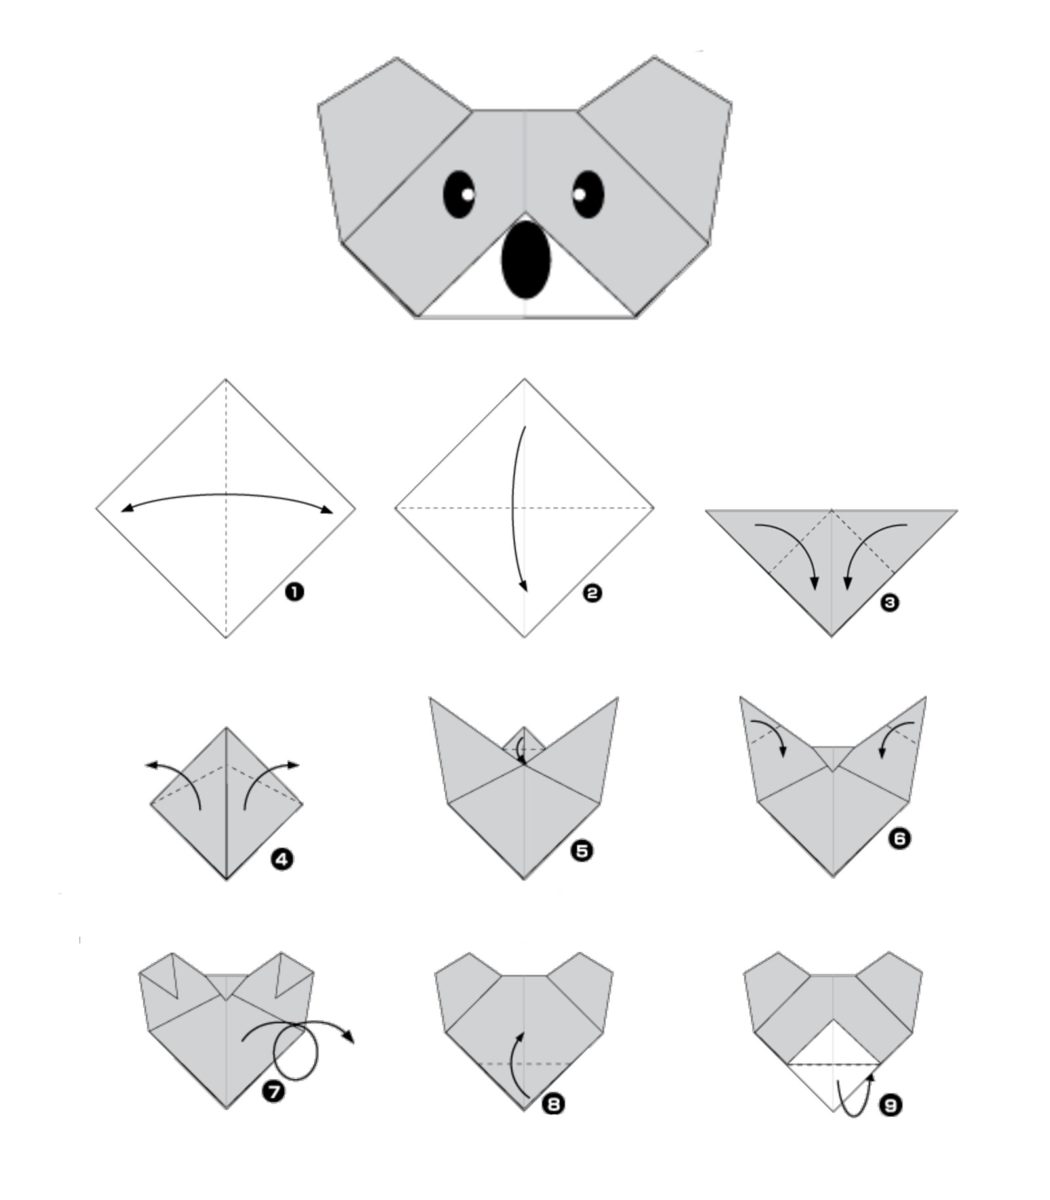 Atelier origami avec les enfants : la tête de Koala ! - Family Sphere